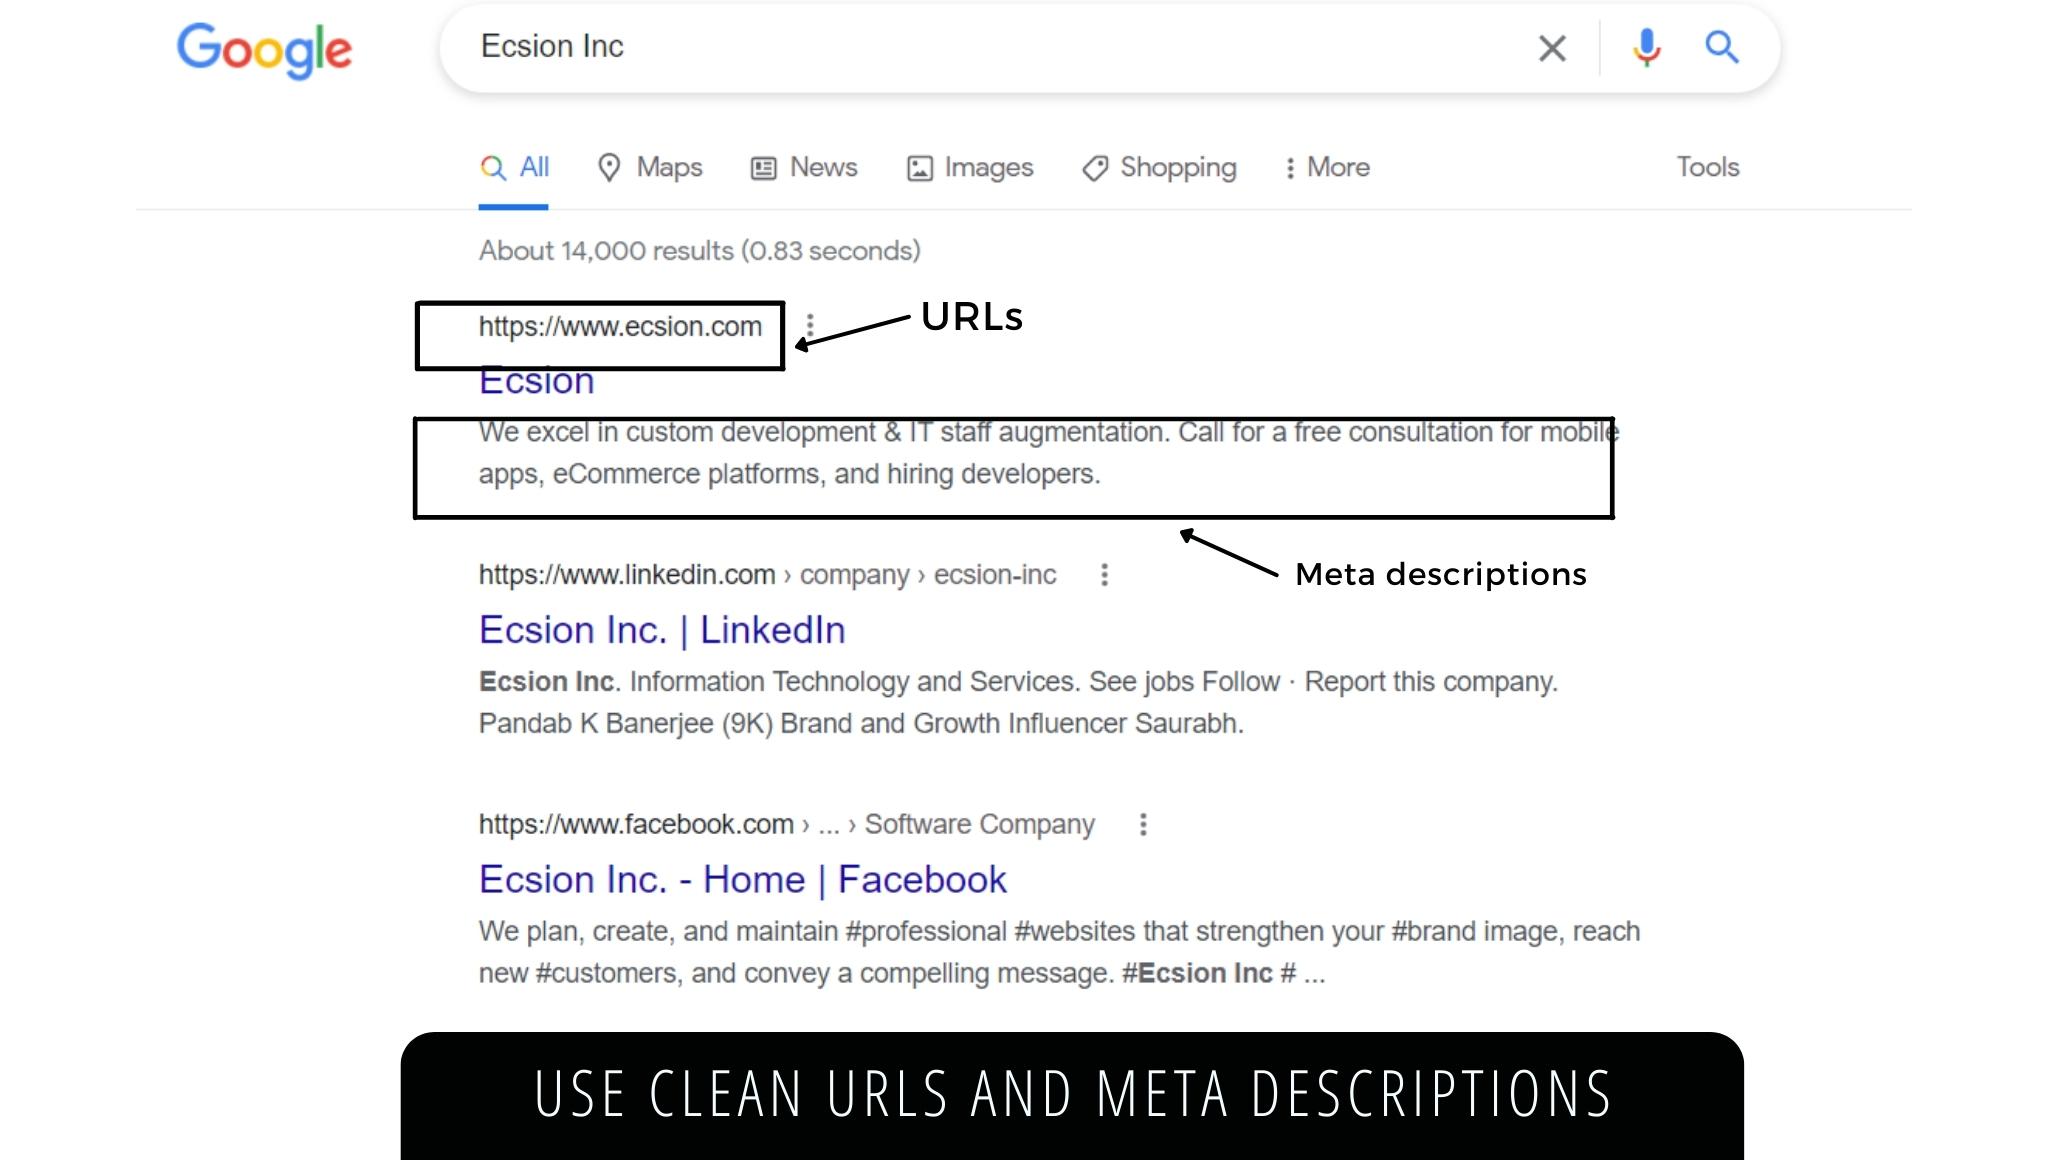 Use clean URLs and Meta descriptions